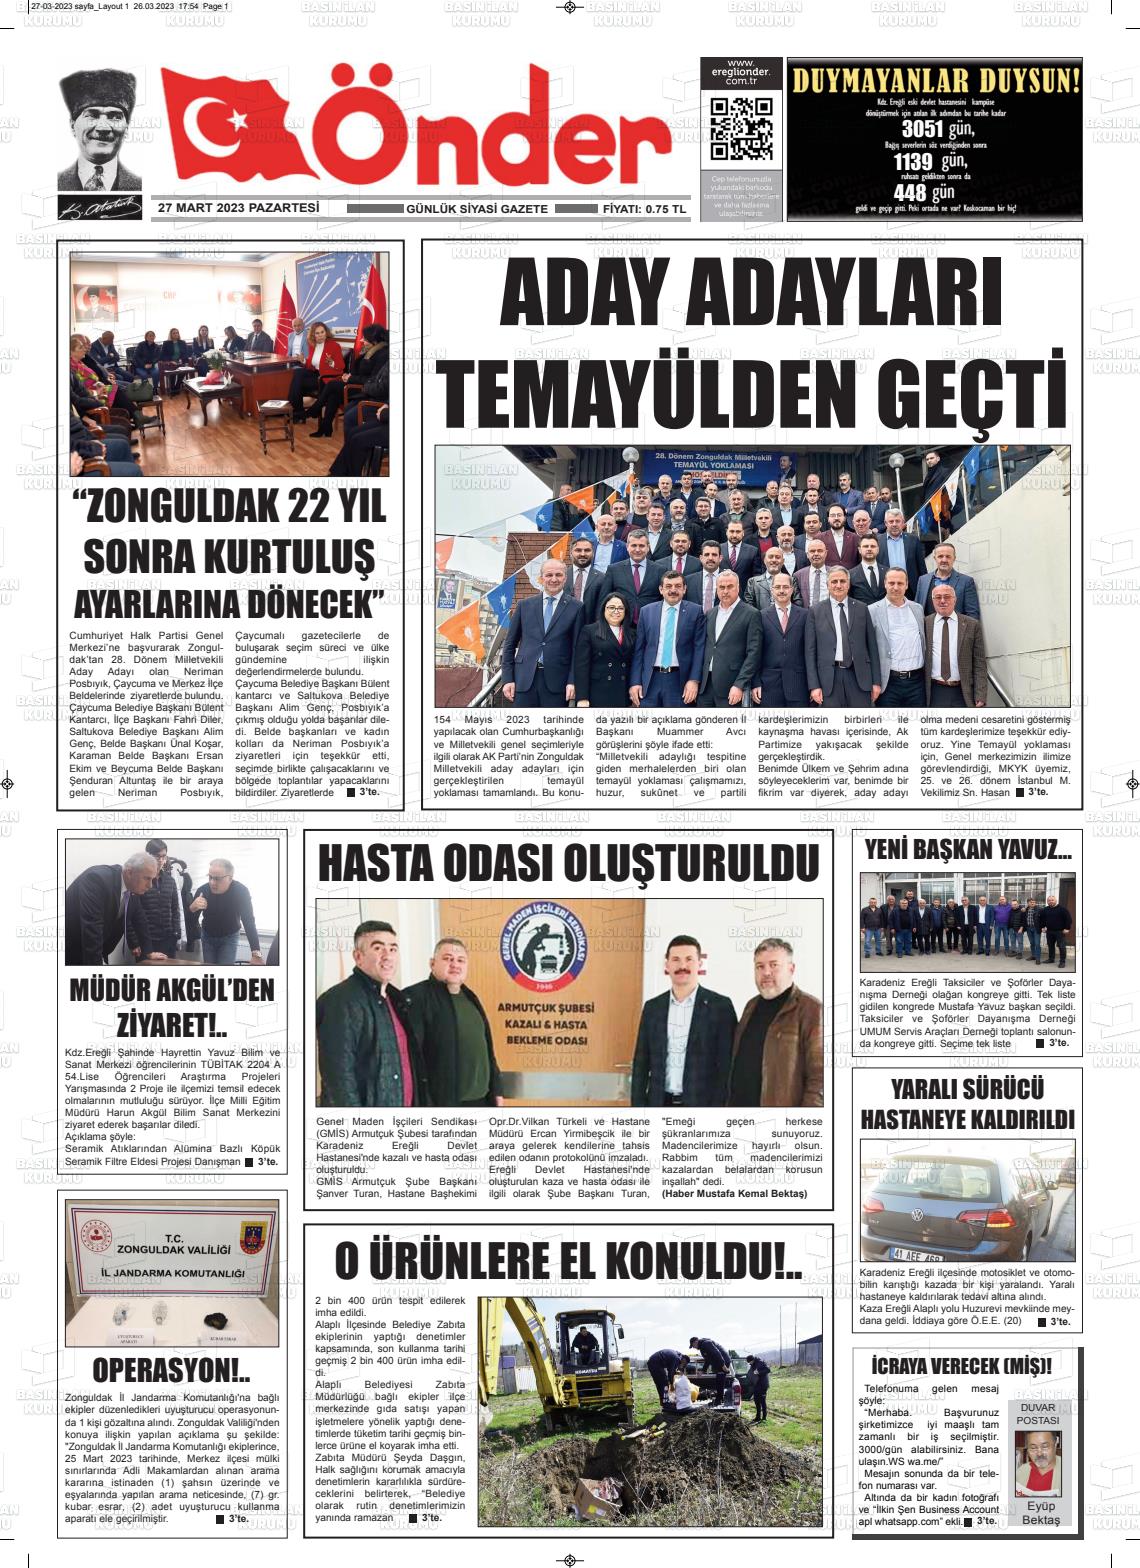 27 Mart 2023 Zonguldak Önder Gazete Manşeti